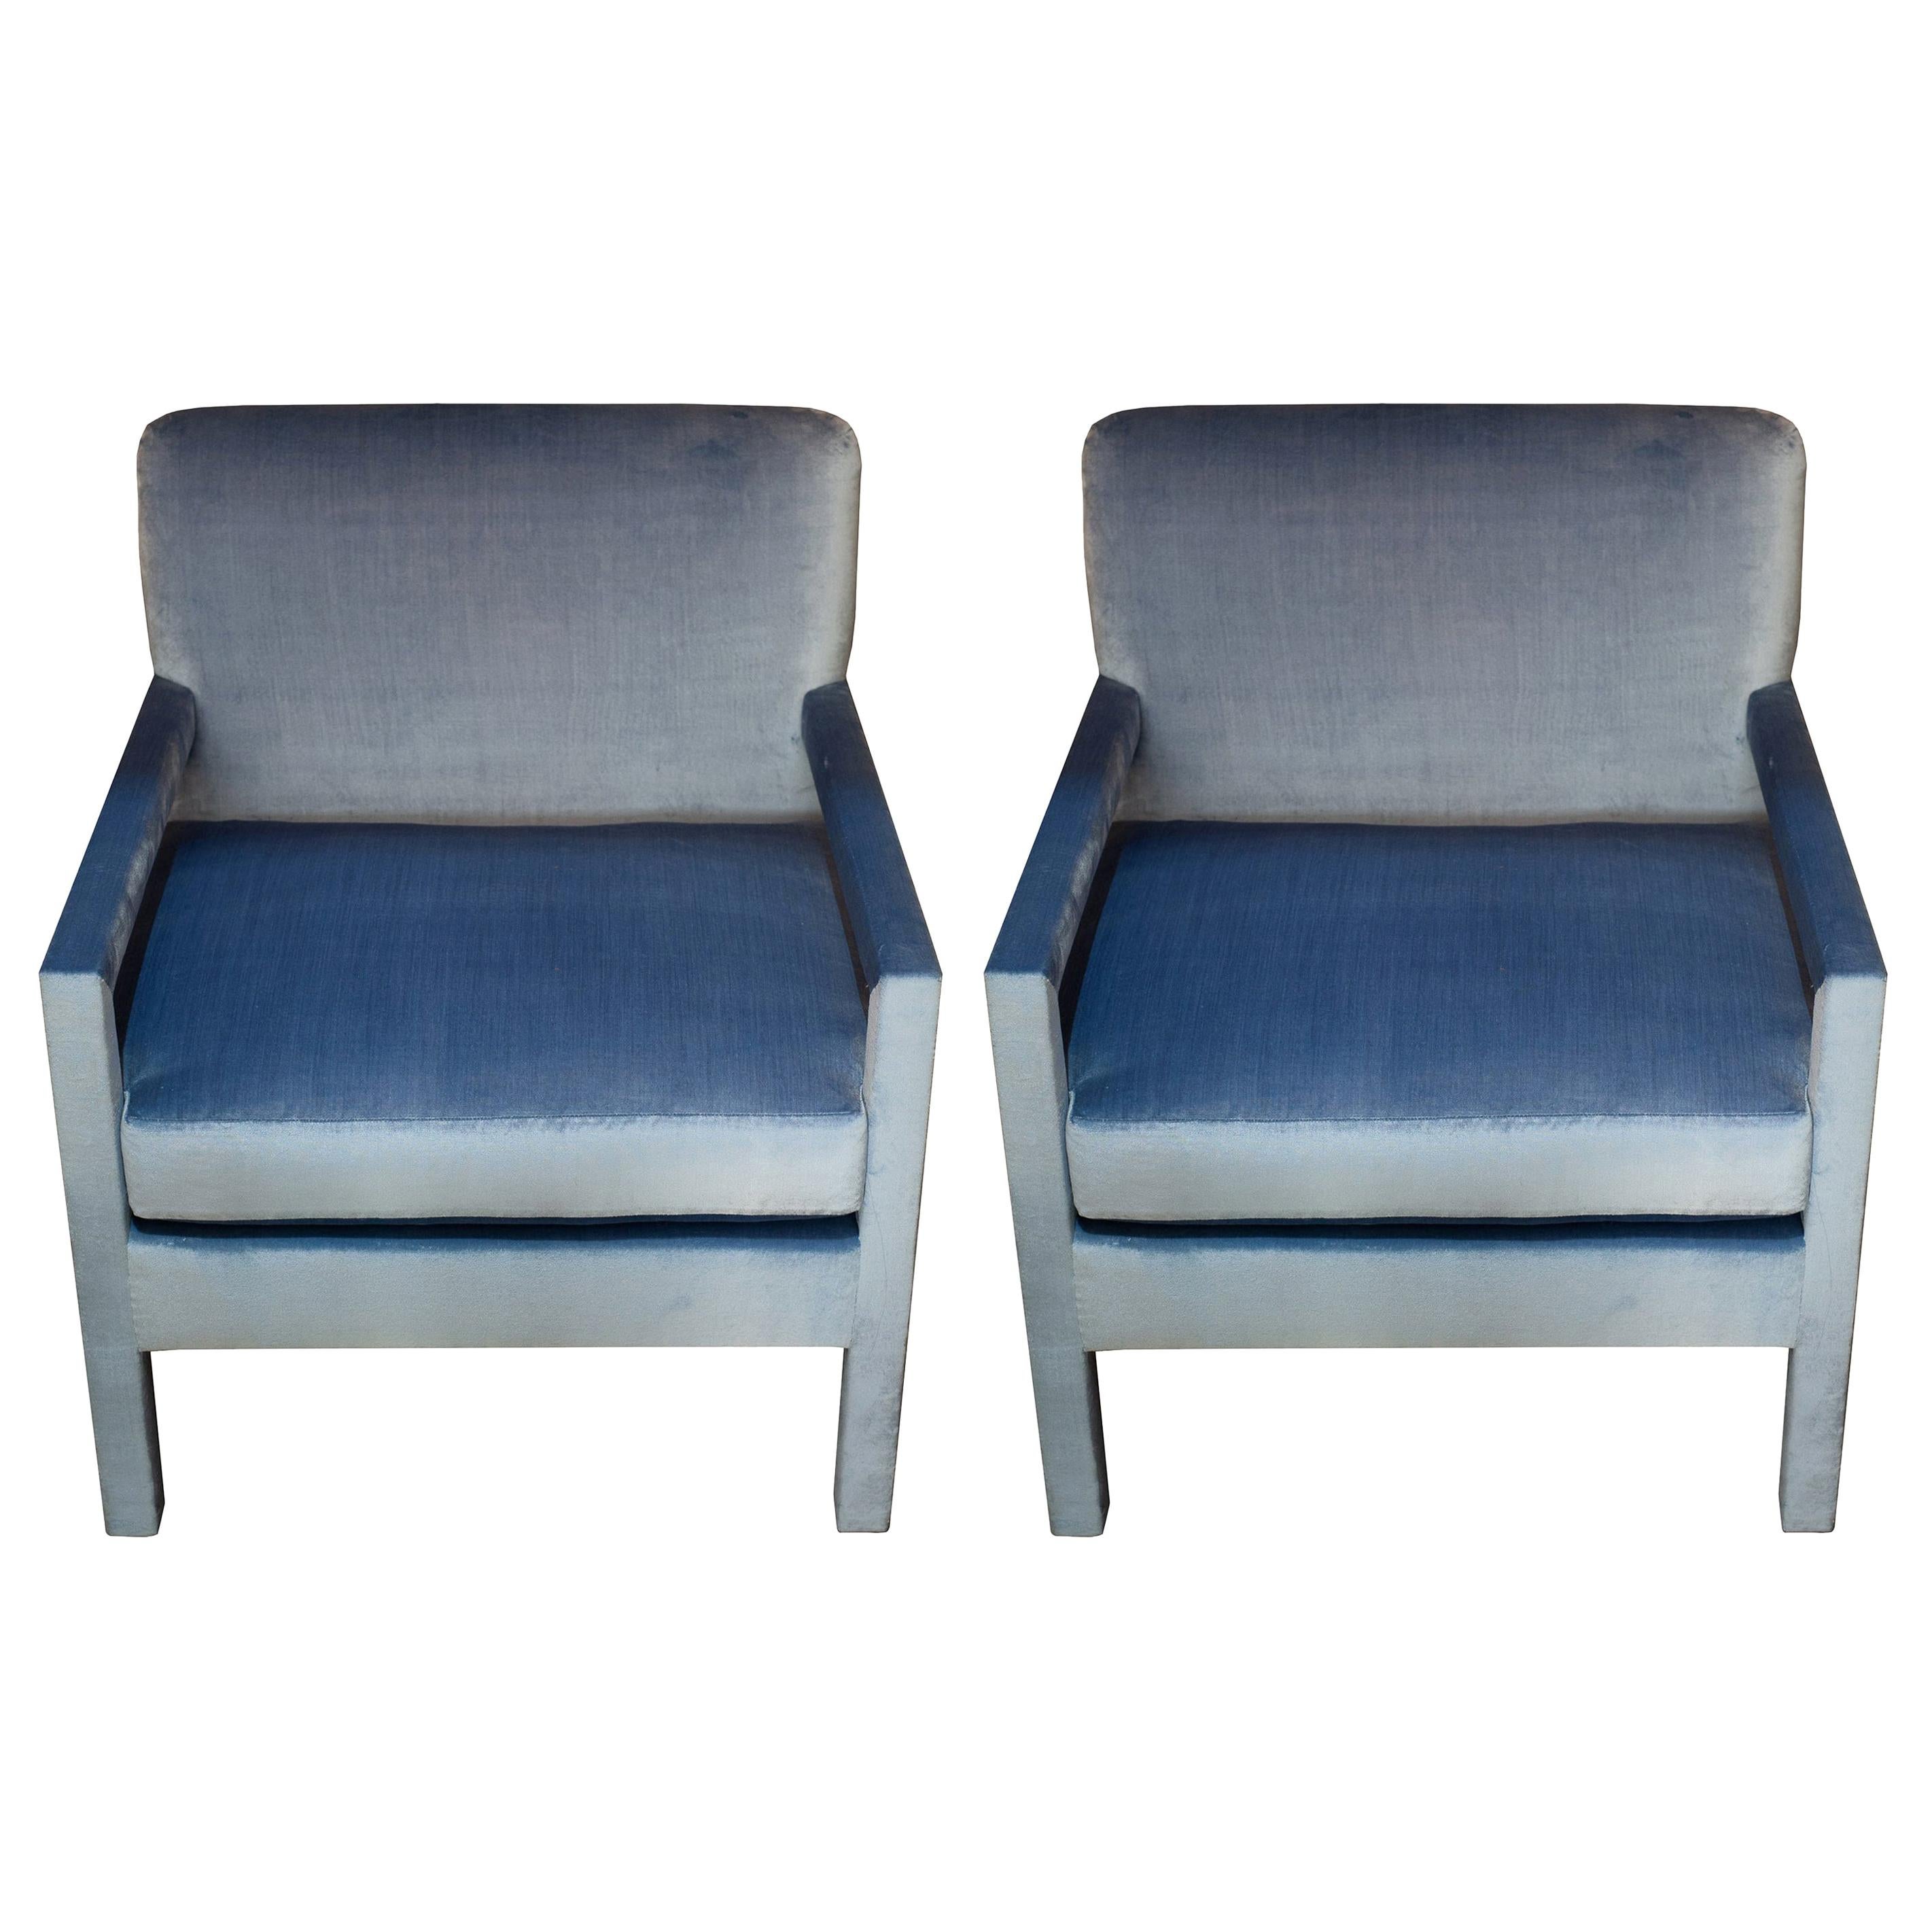 Studio Maison Nurita Parsons Chairs in Delft Blue Silk Velvet For Sale